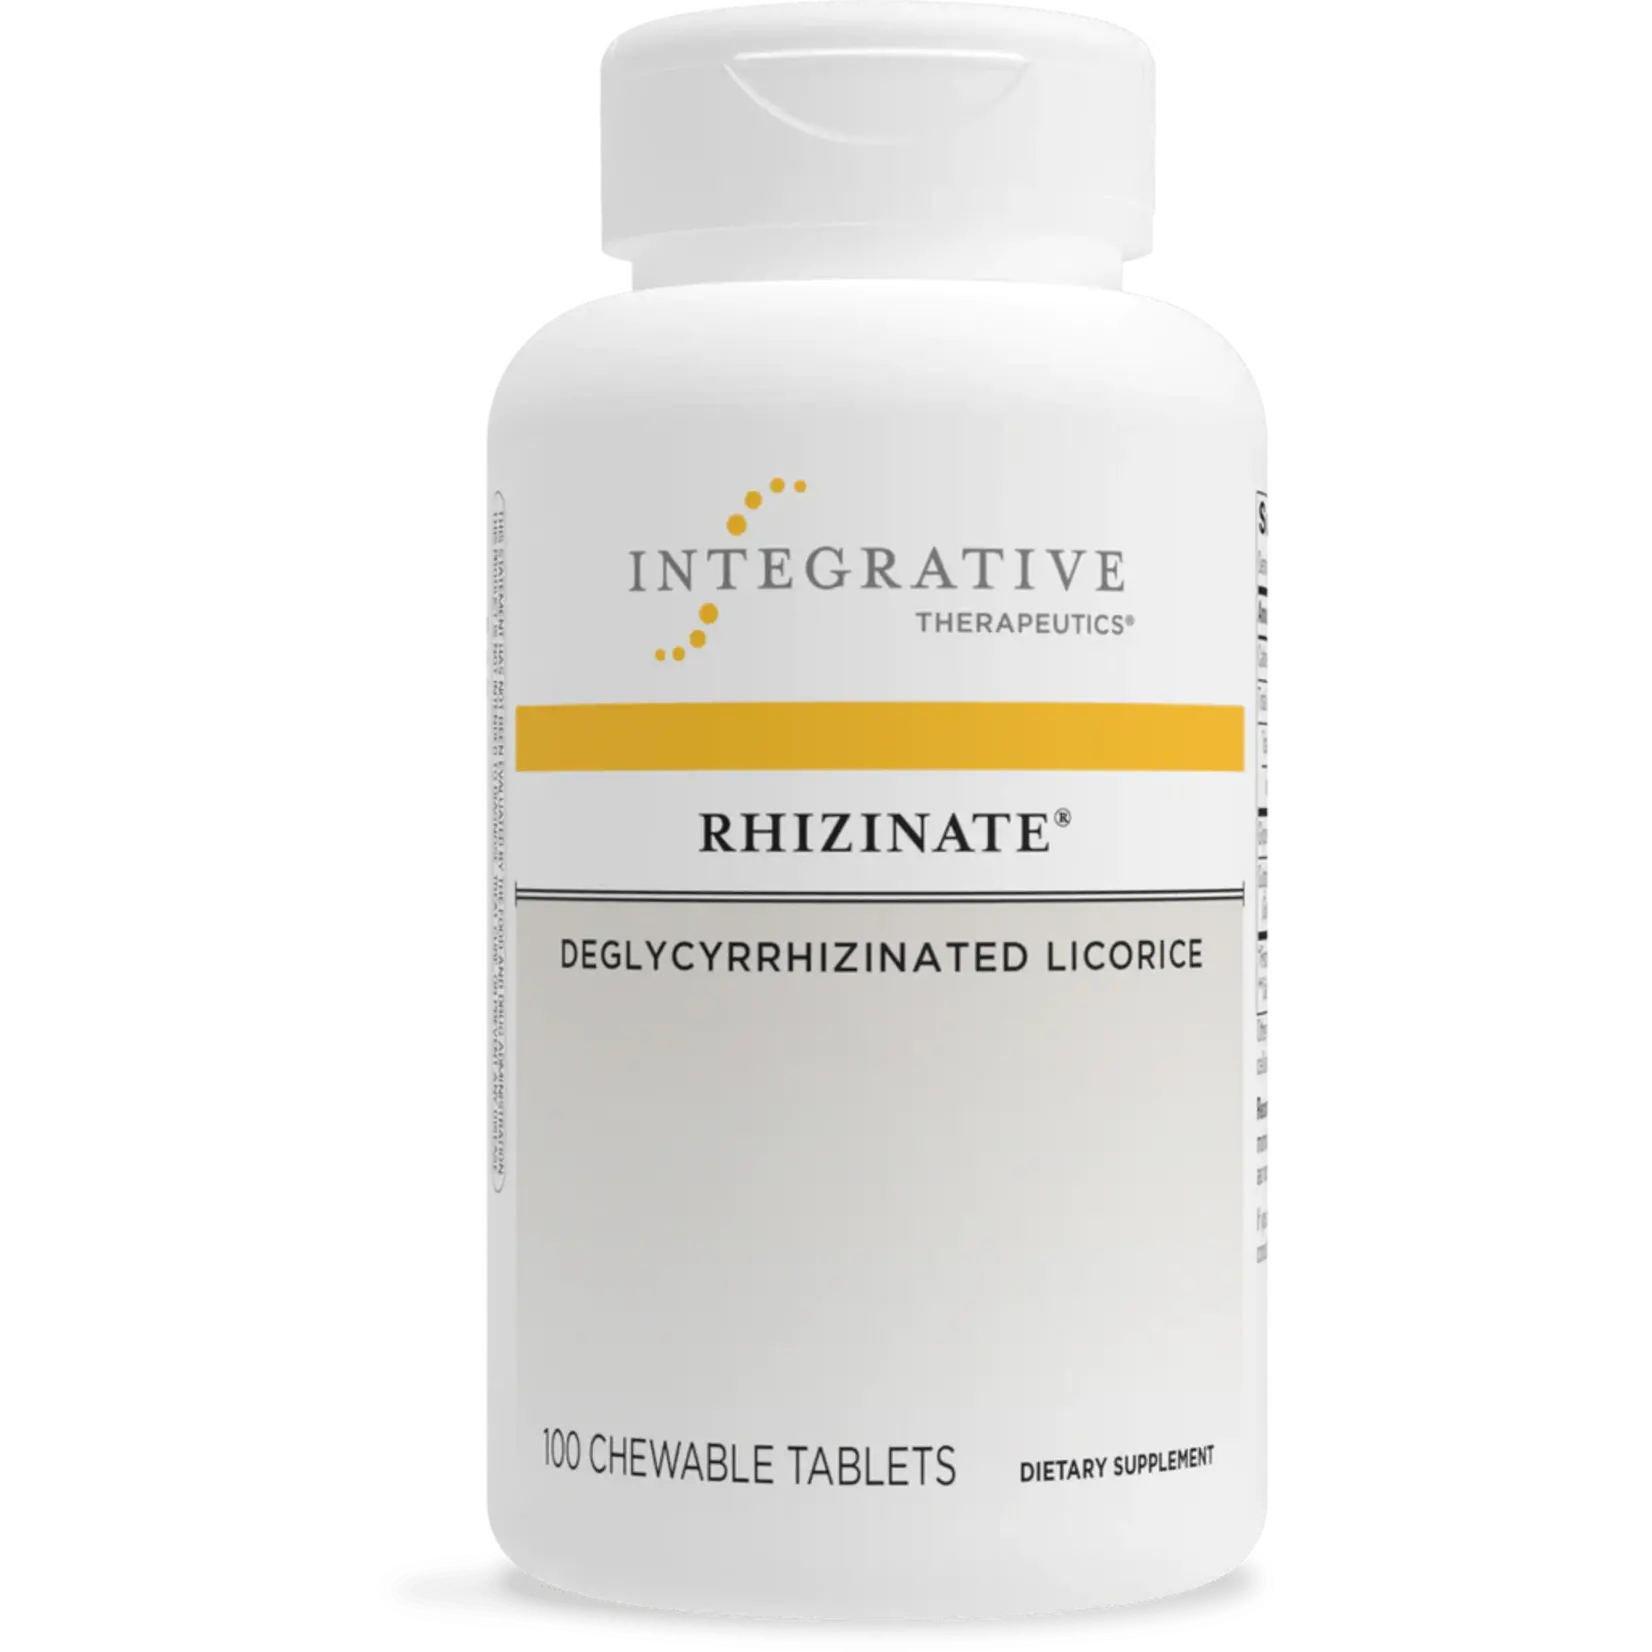 Rhizinate Fructose Free (Integrative Therapeutic)